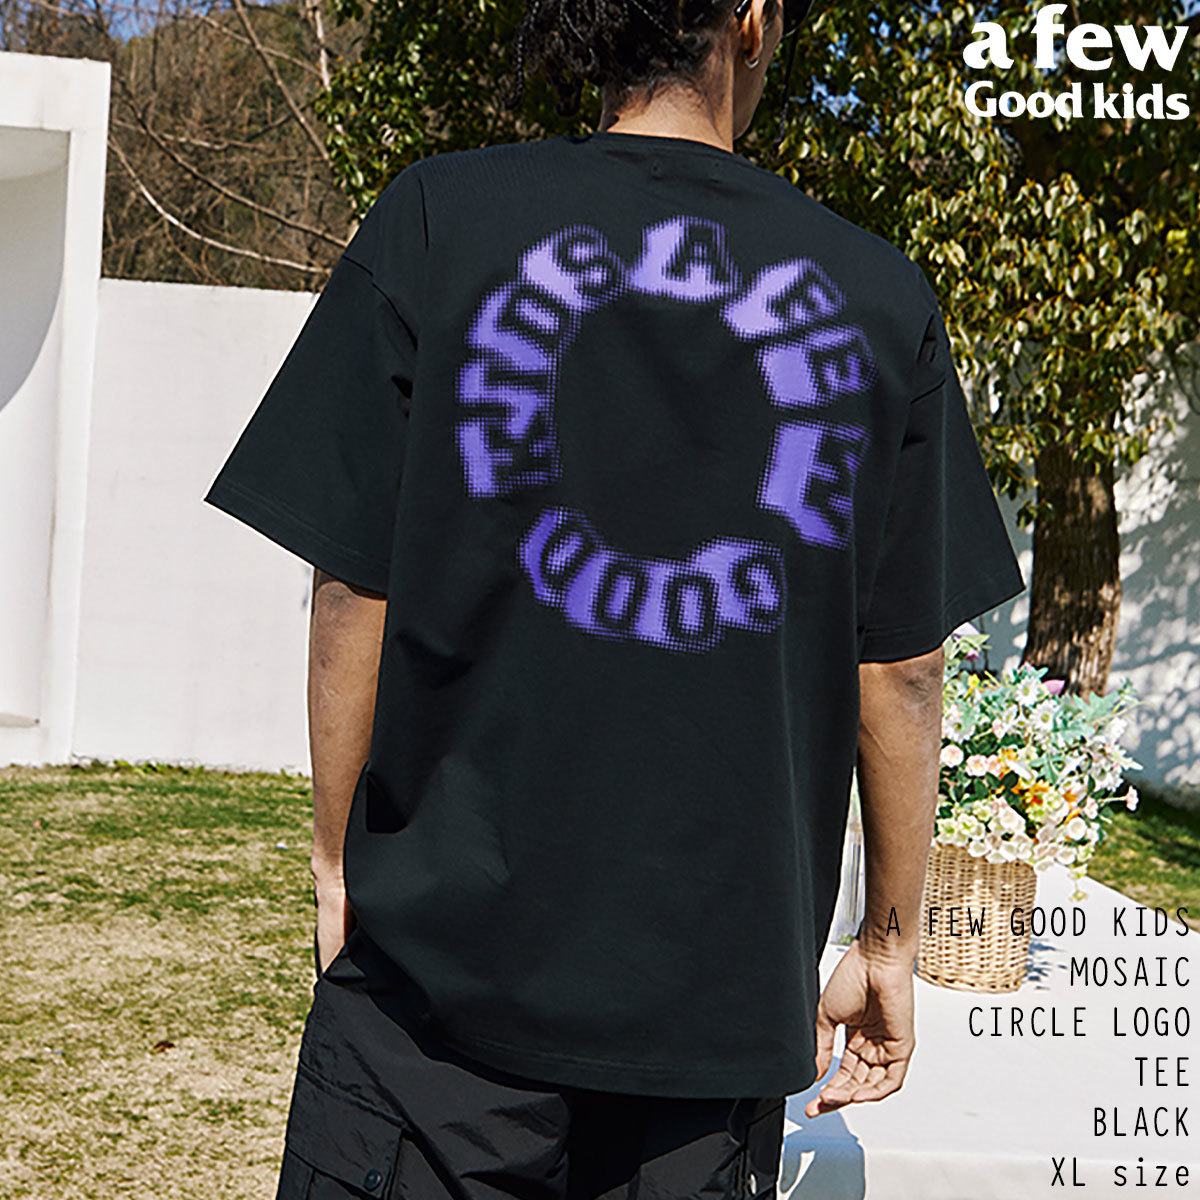 【 A FEW GOOD KIDS 】 AFGK 正規品 男女兼用 ユニセックス モザイク サークルロゴ Tシャツ MOSAIC CIRCLE LOGO TEE ブラック XL_画像1